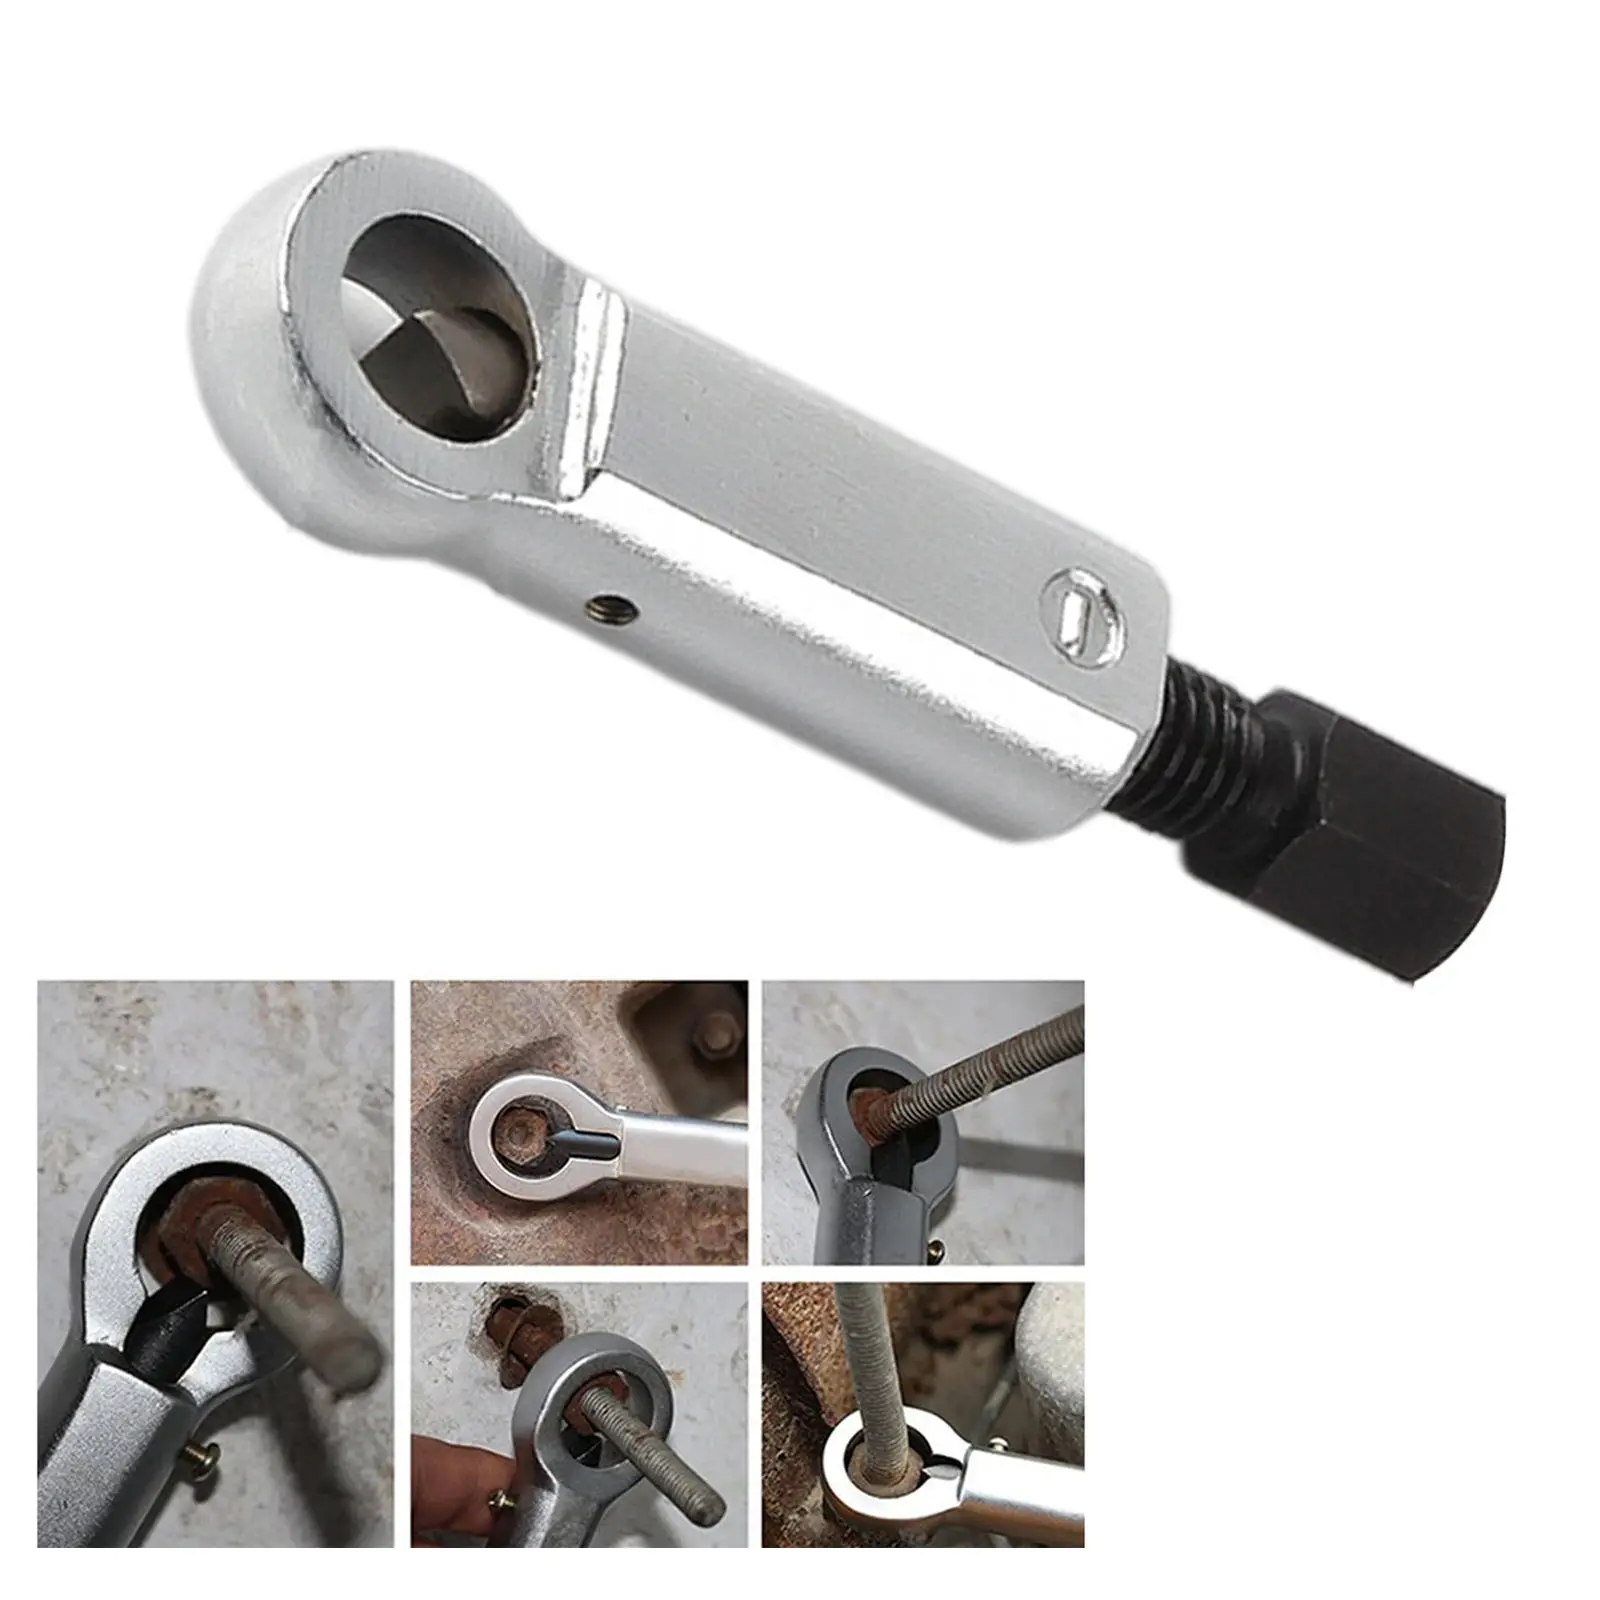 Bearing Steel Adjustable Stuck Nuts Splitter Broken Damaged Corroded Rusted Nut Breaker Remover Hand Separation Tool